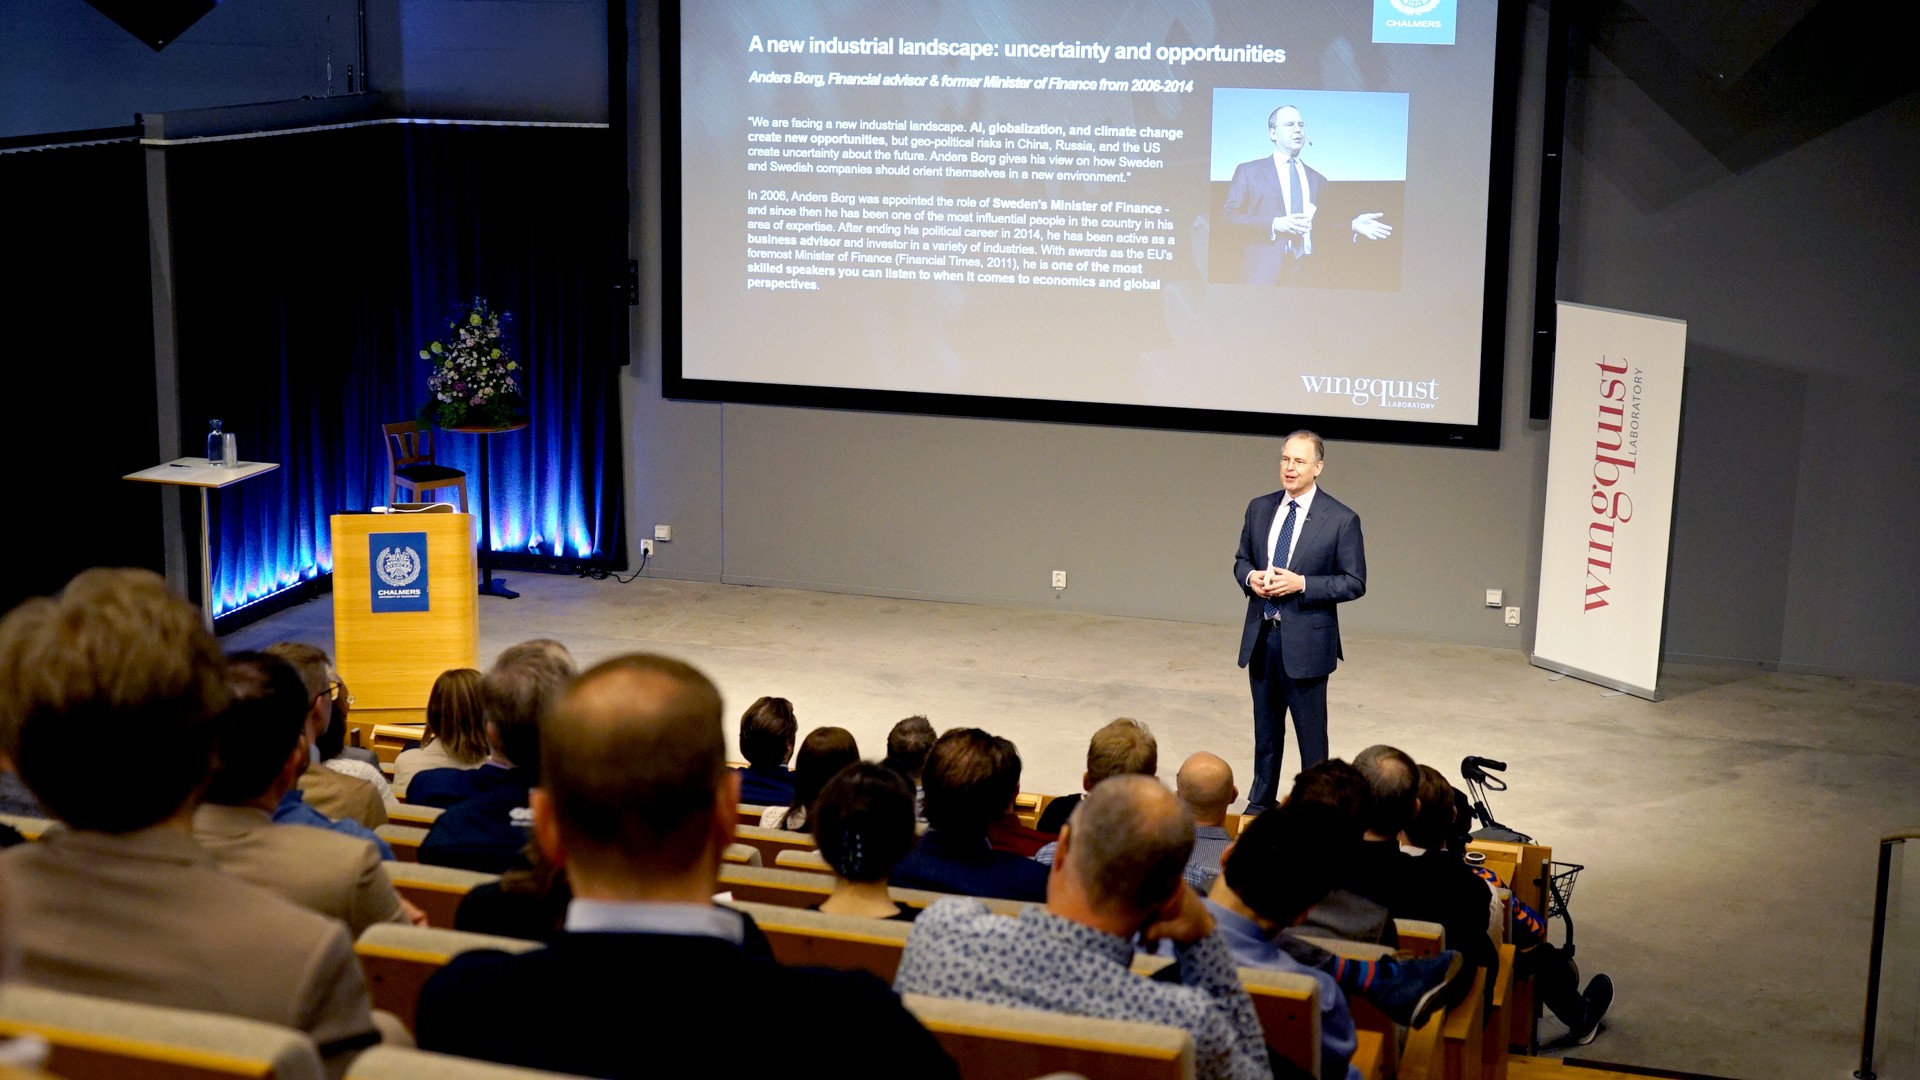 Anders Borg presenting at the seminar.